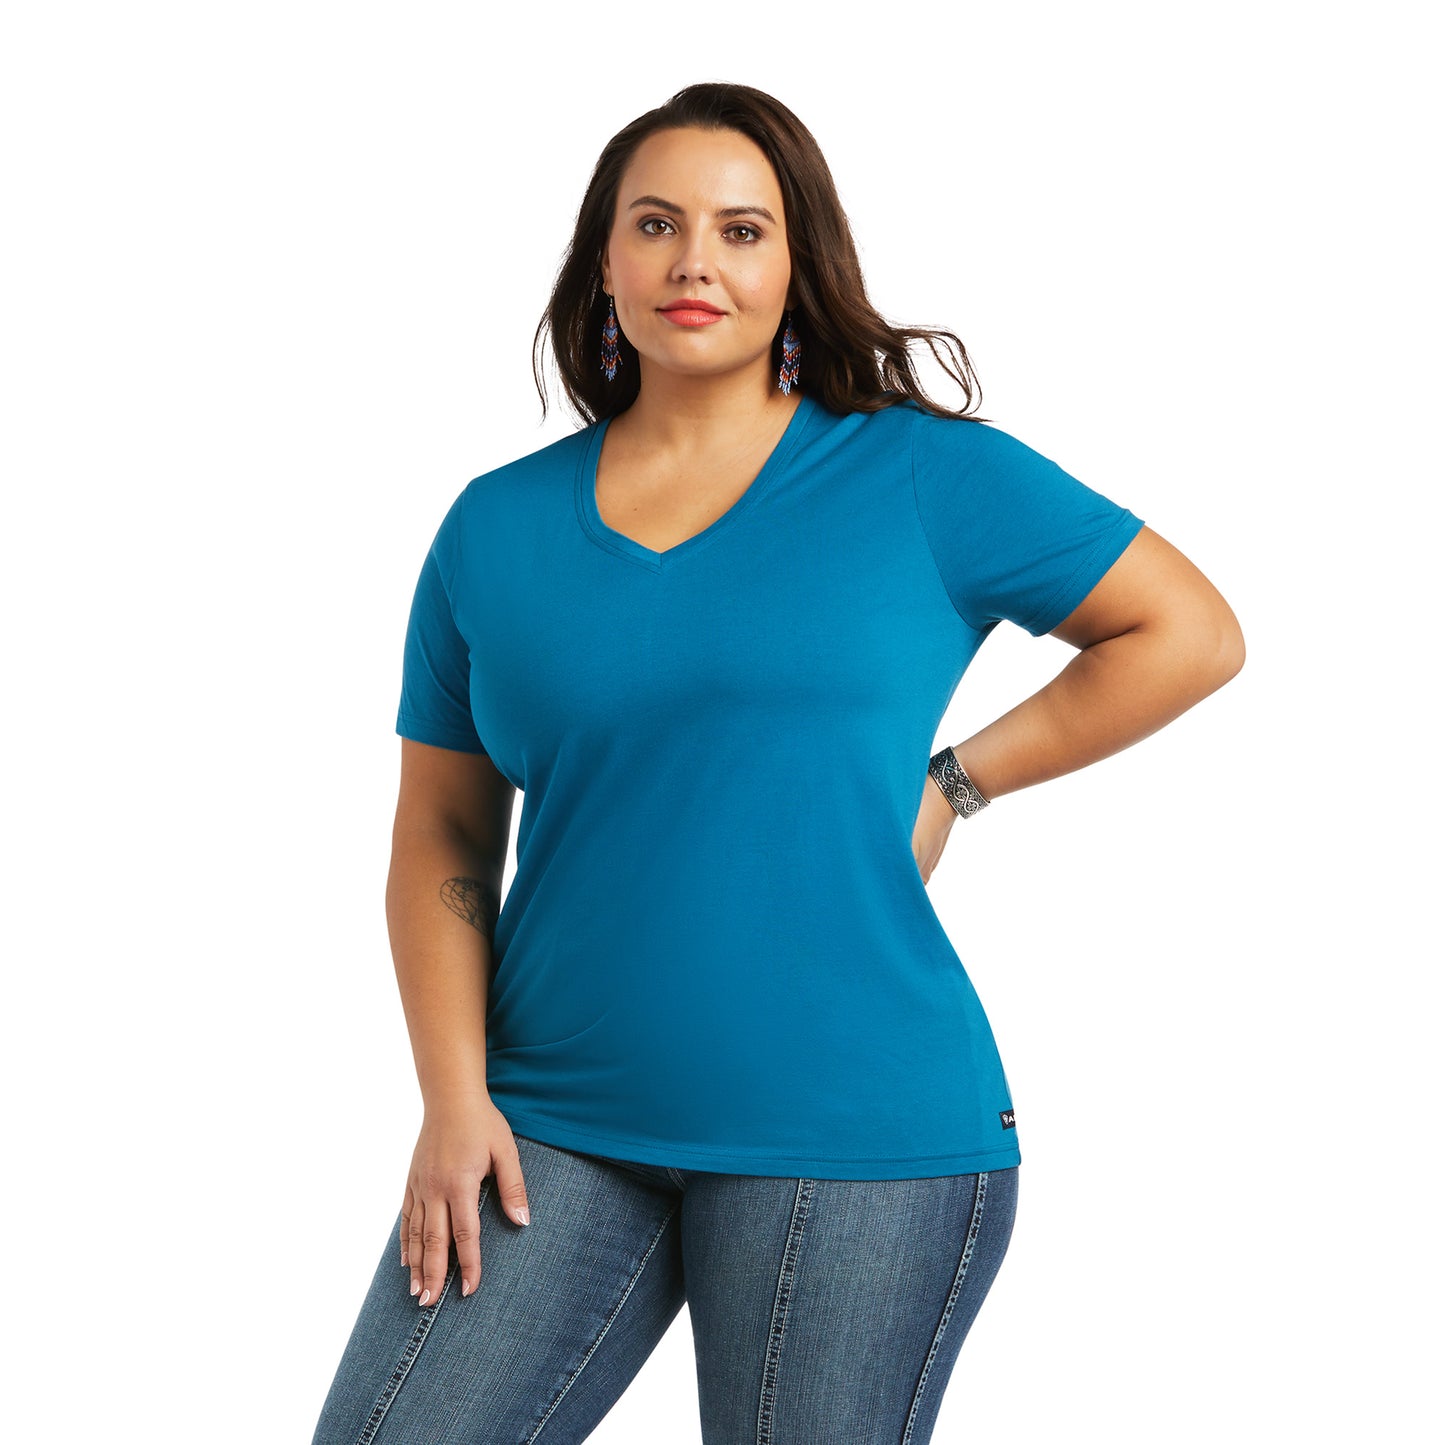 Ariat Ladies Element Saxony Blue Short Sleeve T-Shirt 10039418